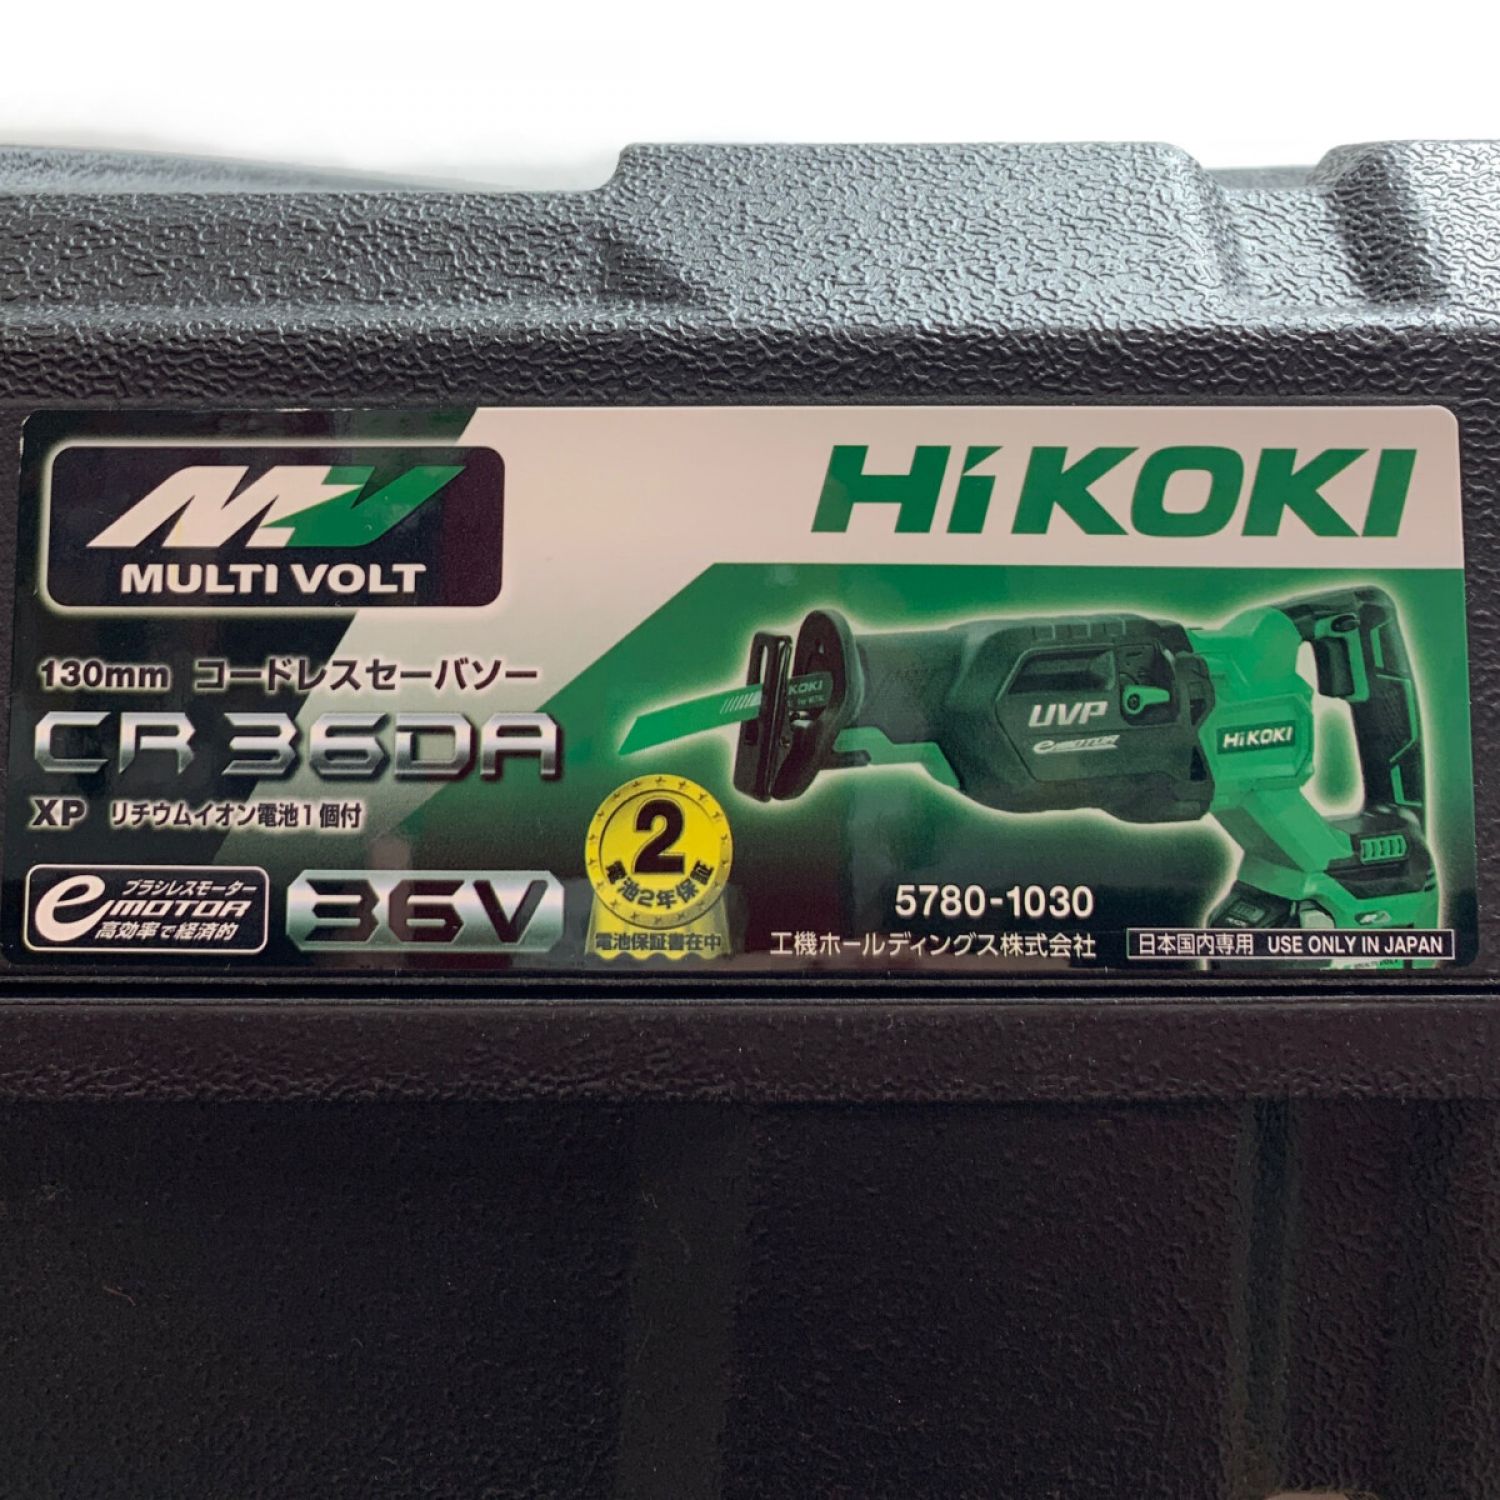 HiKOKI　コードレスセーバソー (レシプロソー)　CR36DA(XP)